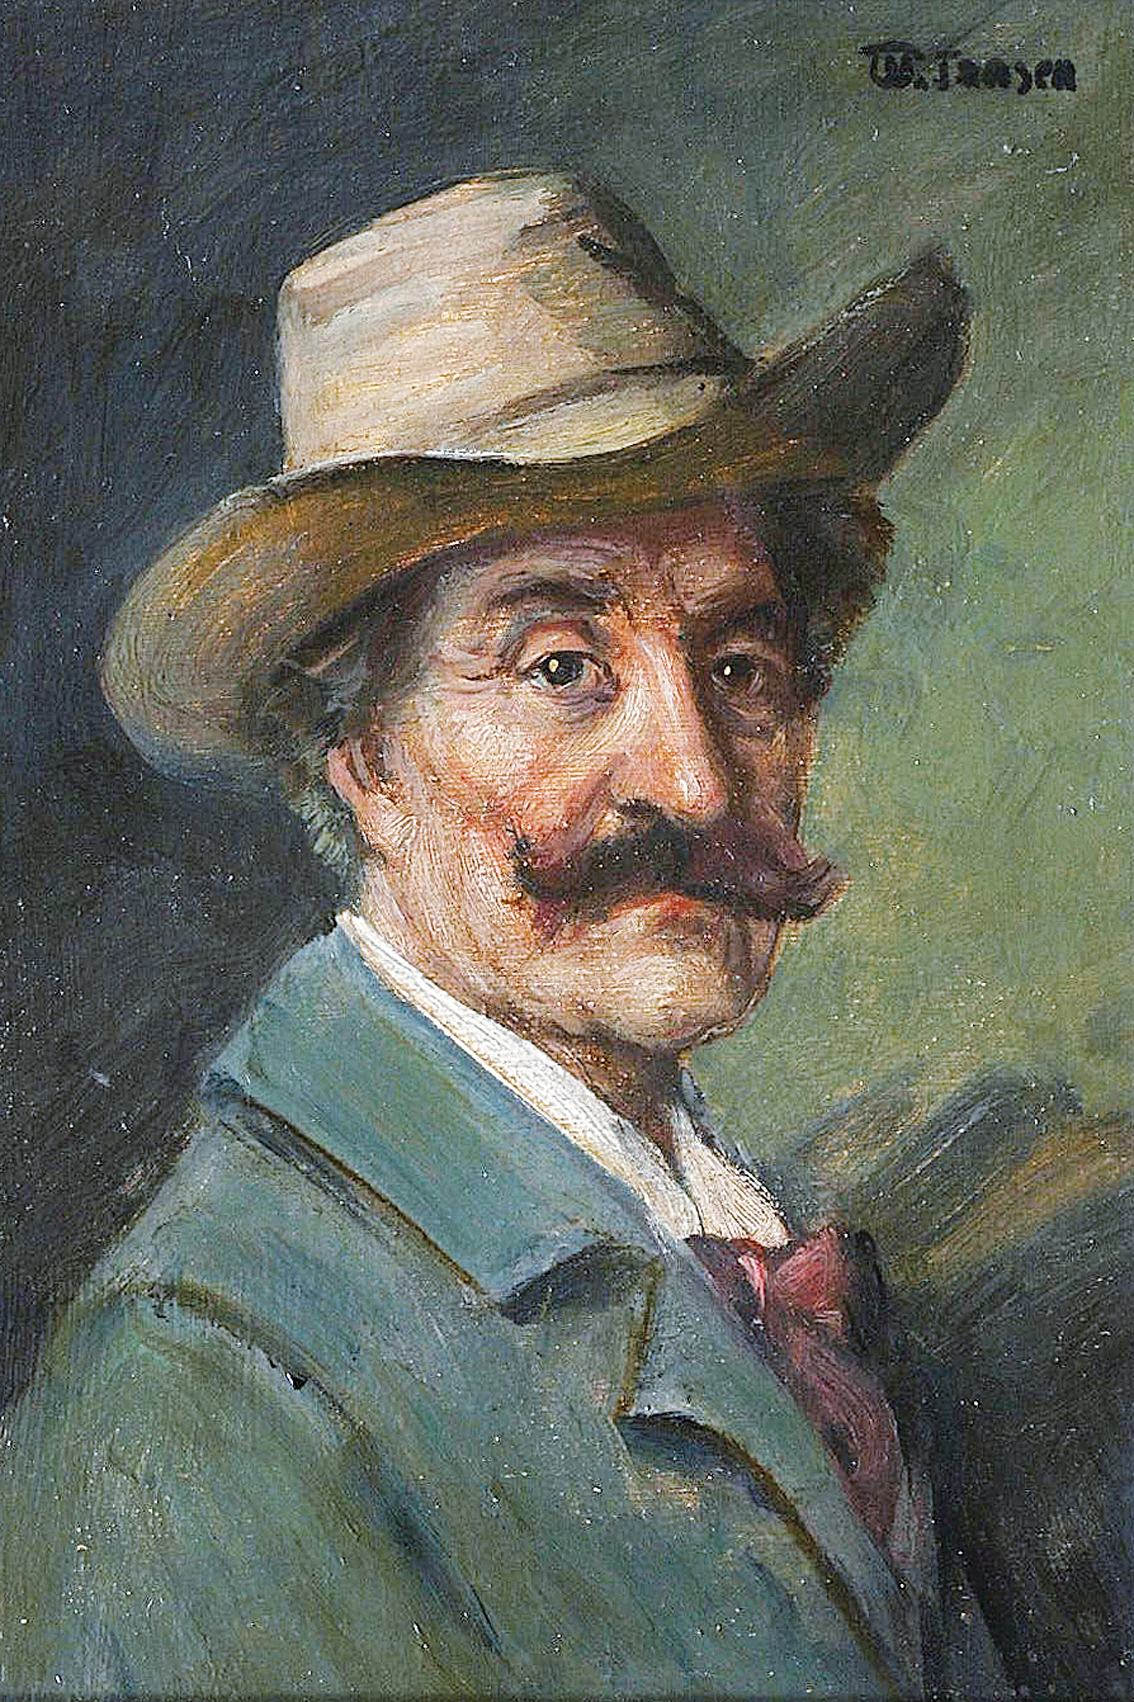 A portrait of an older man